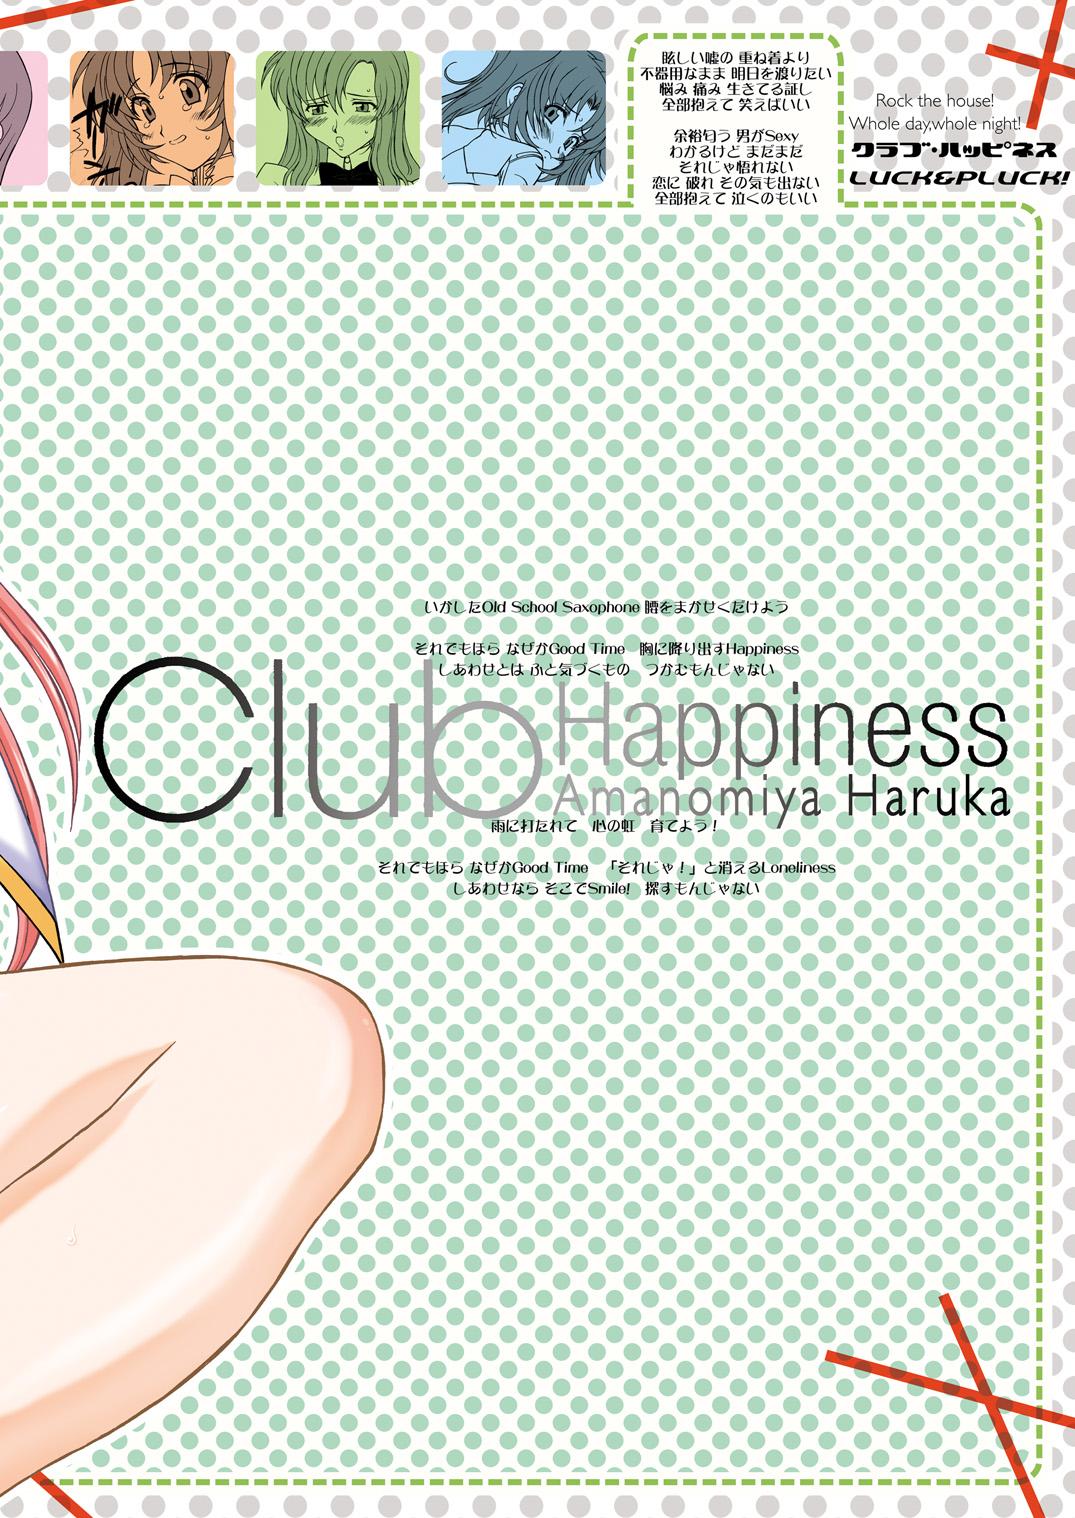 Club Happiness 31